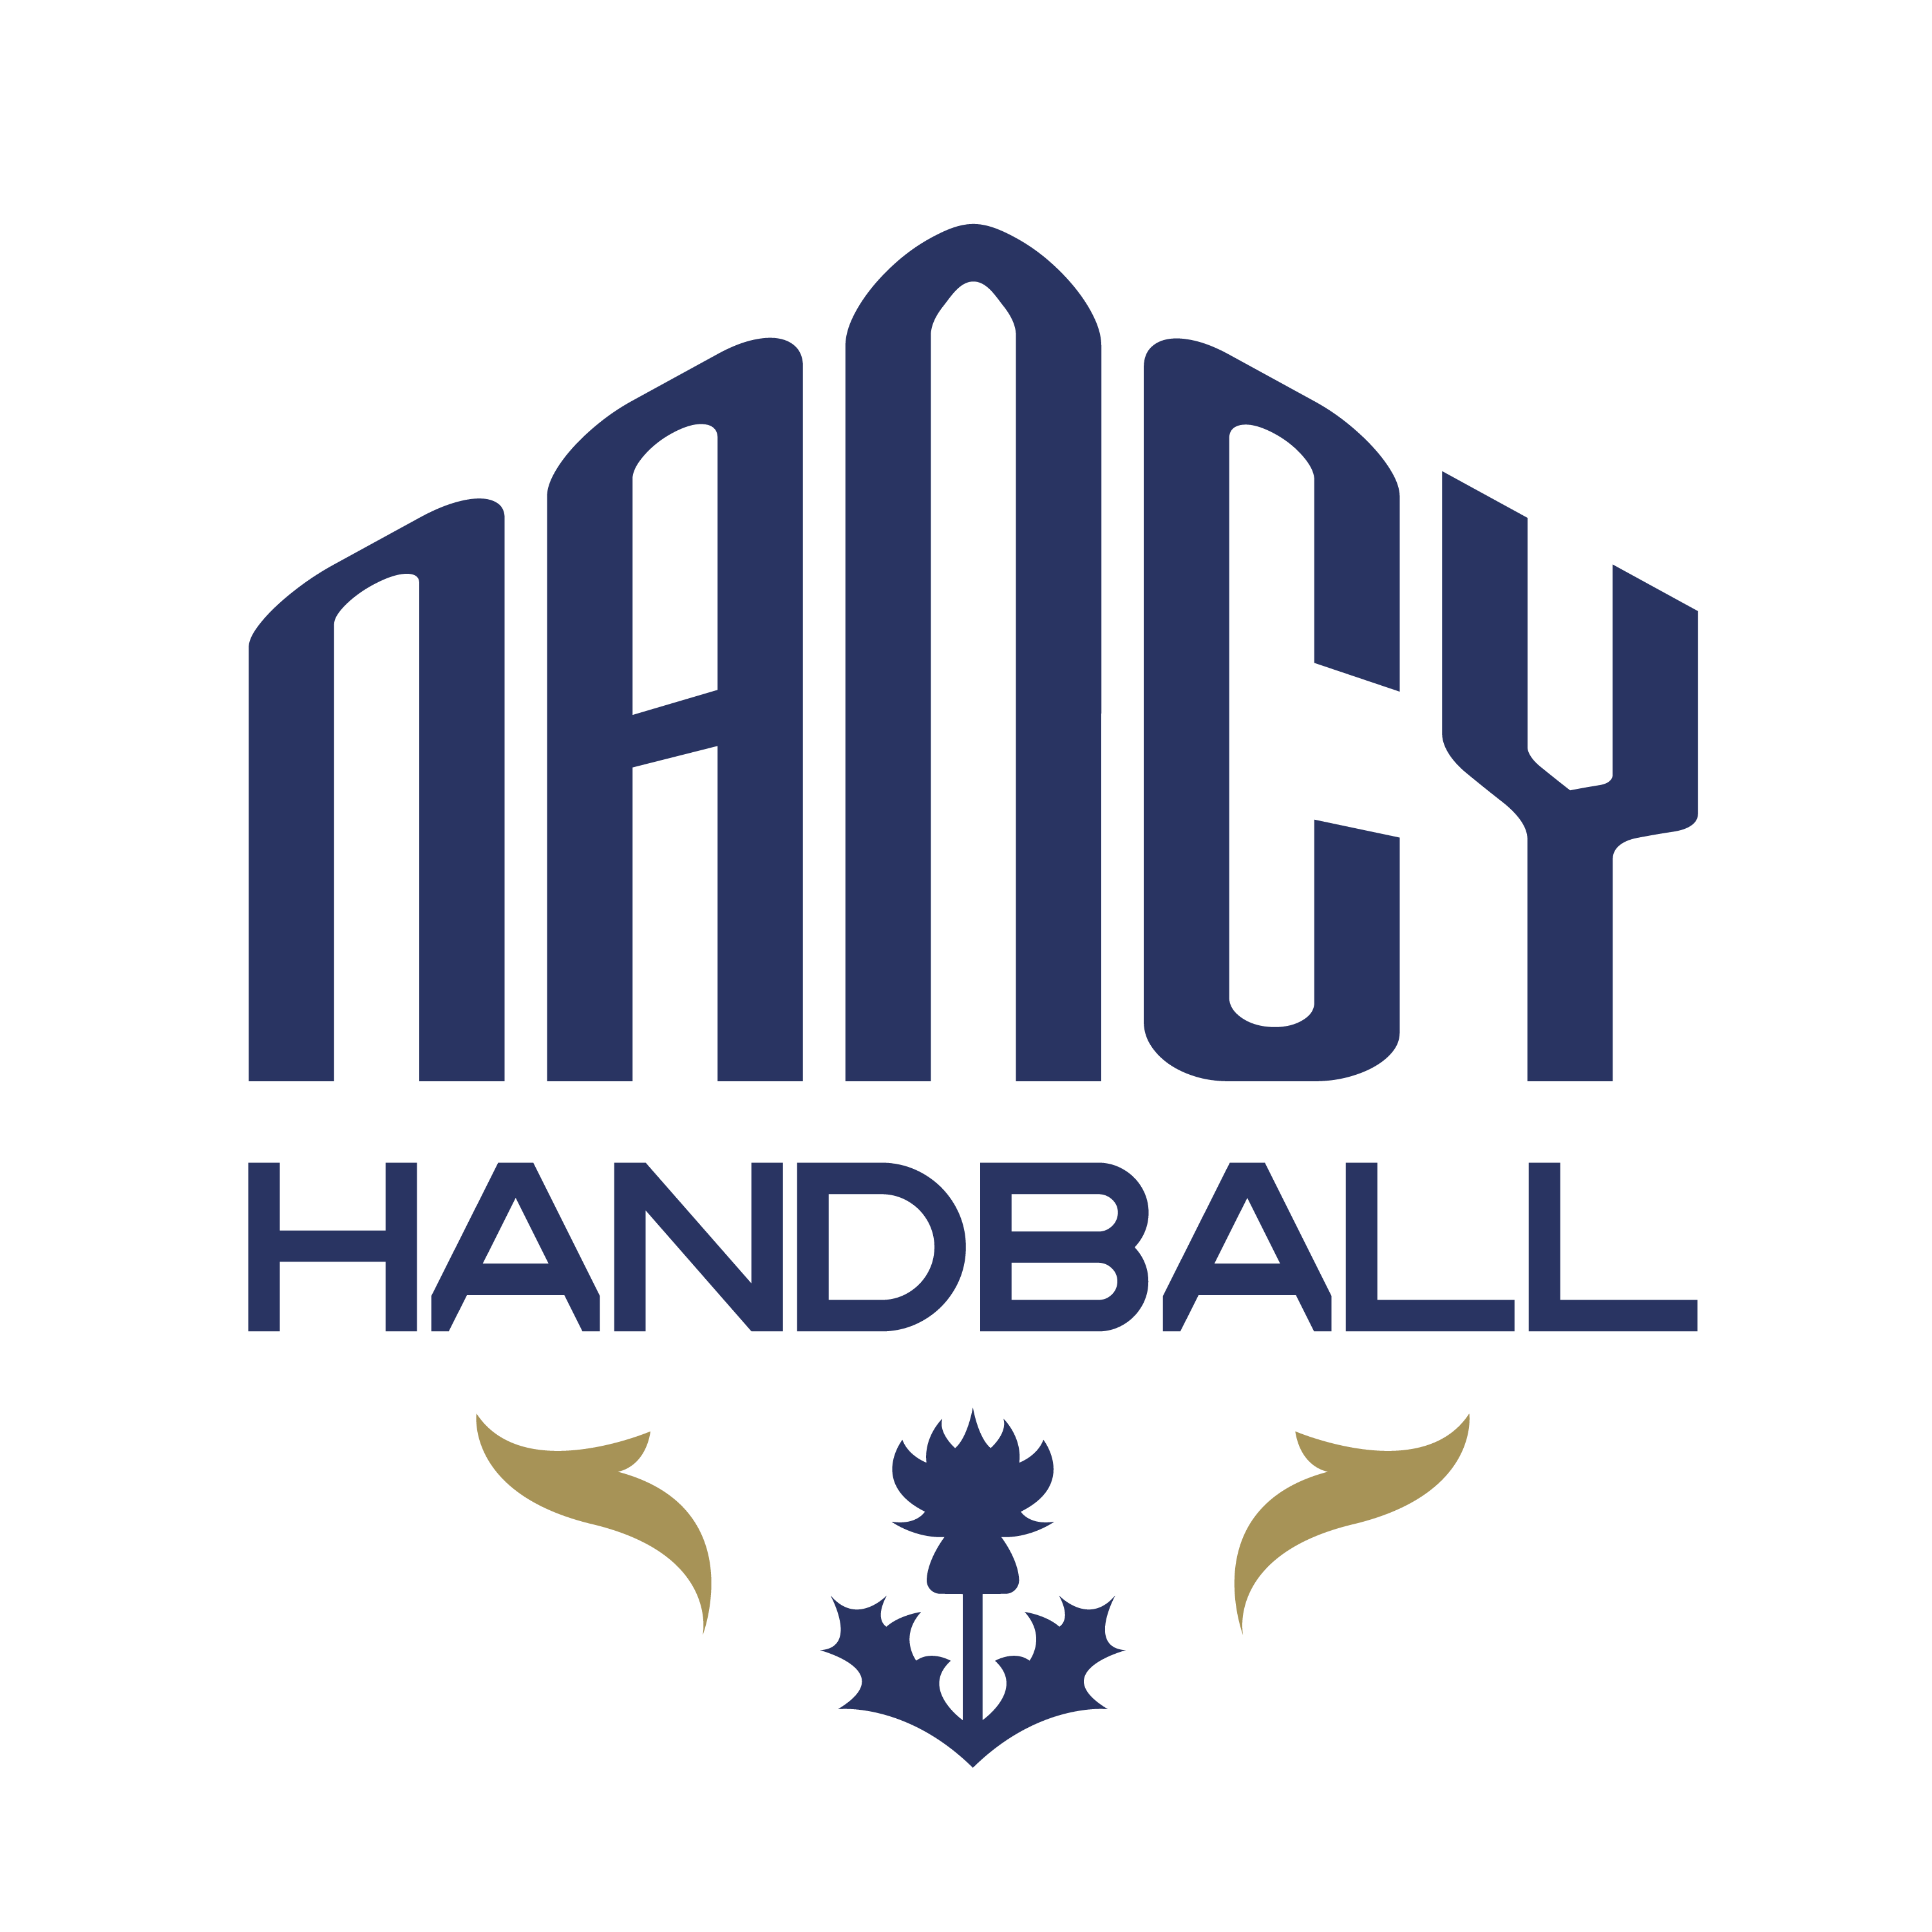 NANCY HB 3